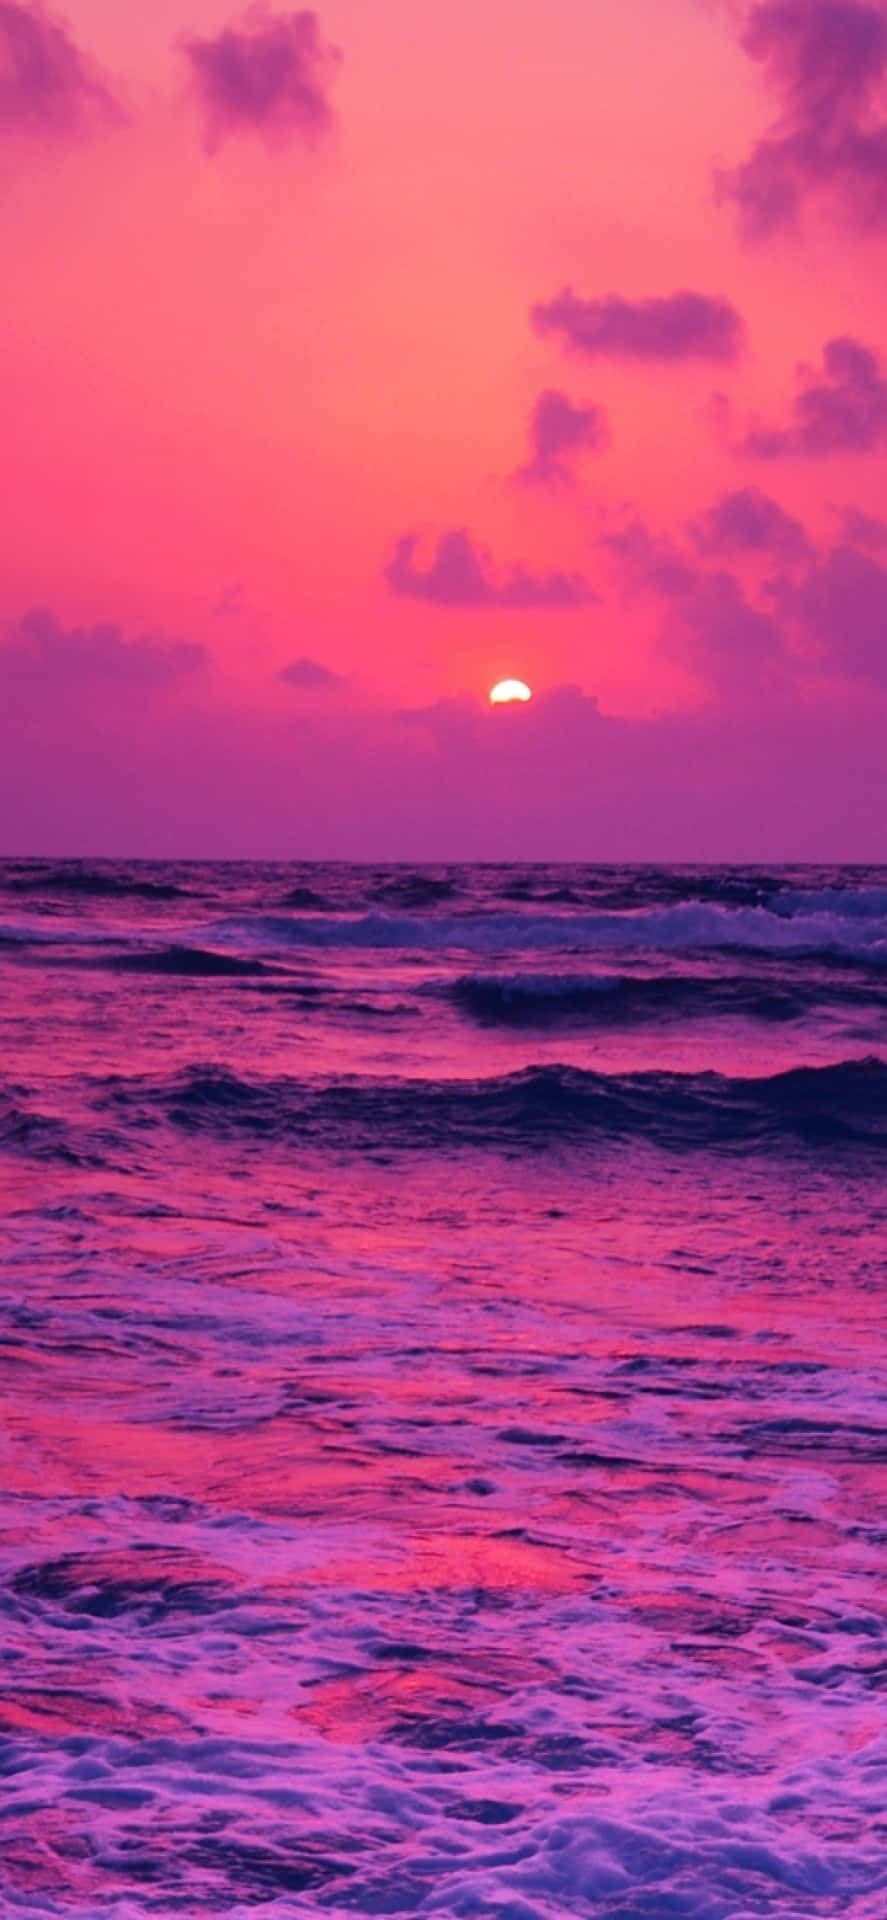 Pink Beach Sunset Clouds On The Horizon Wallpaper